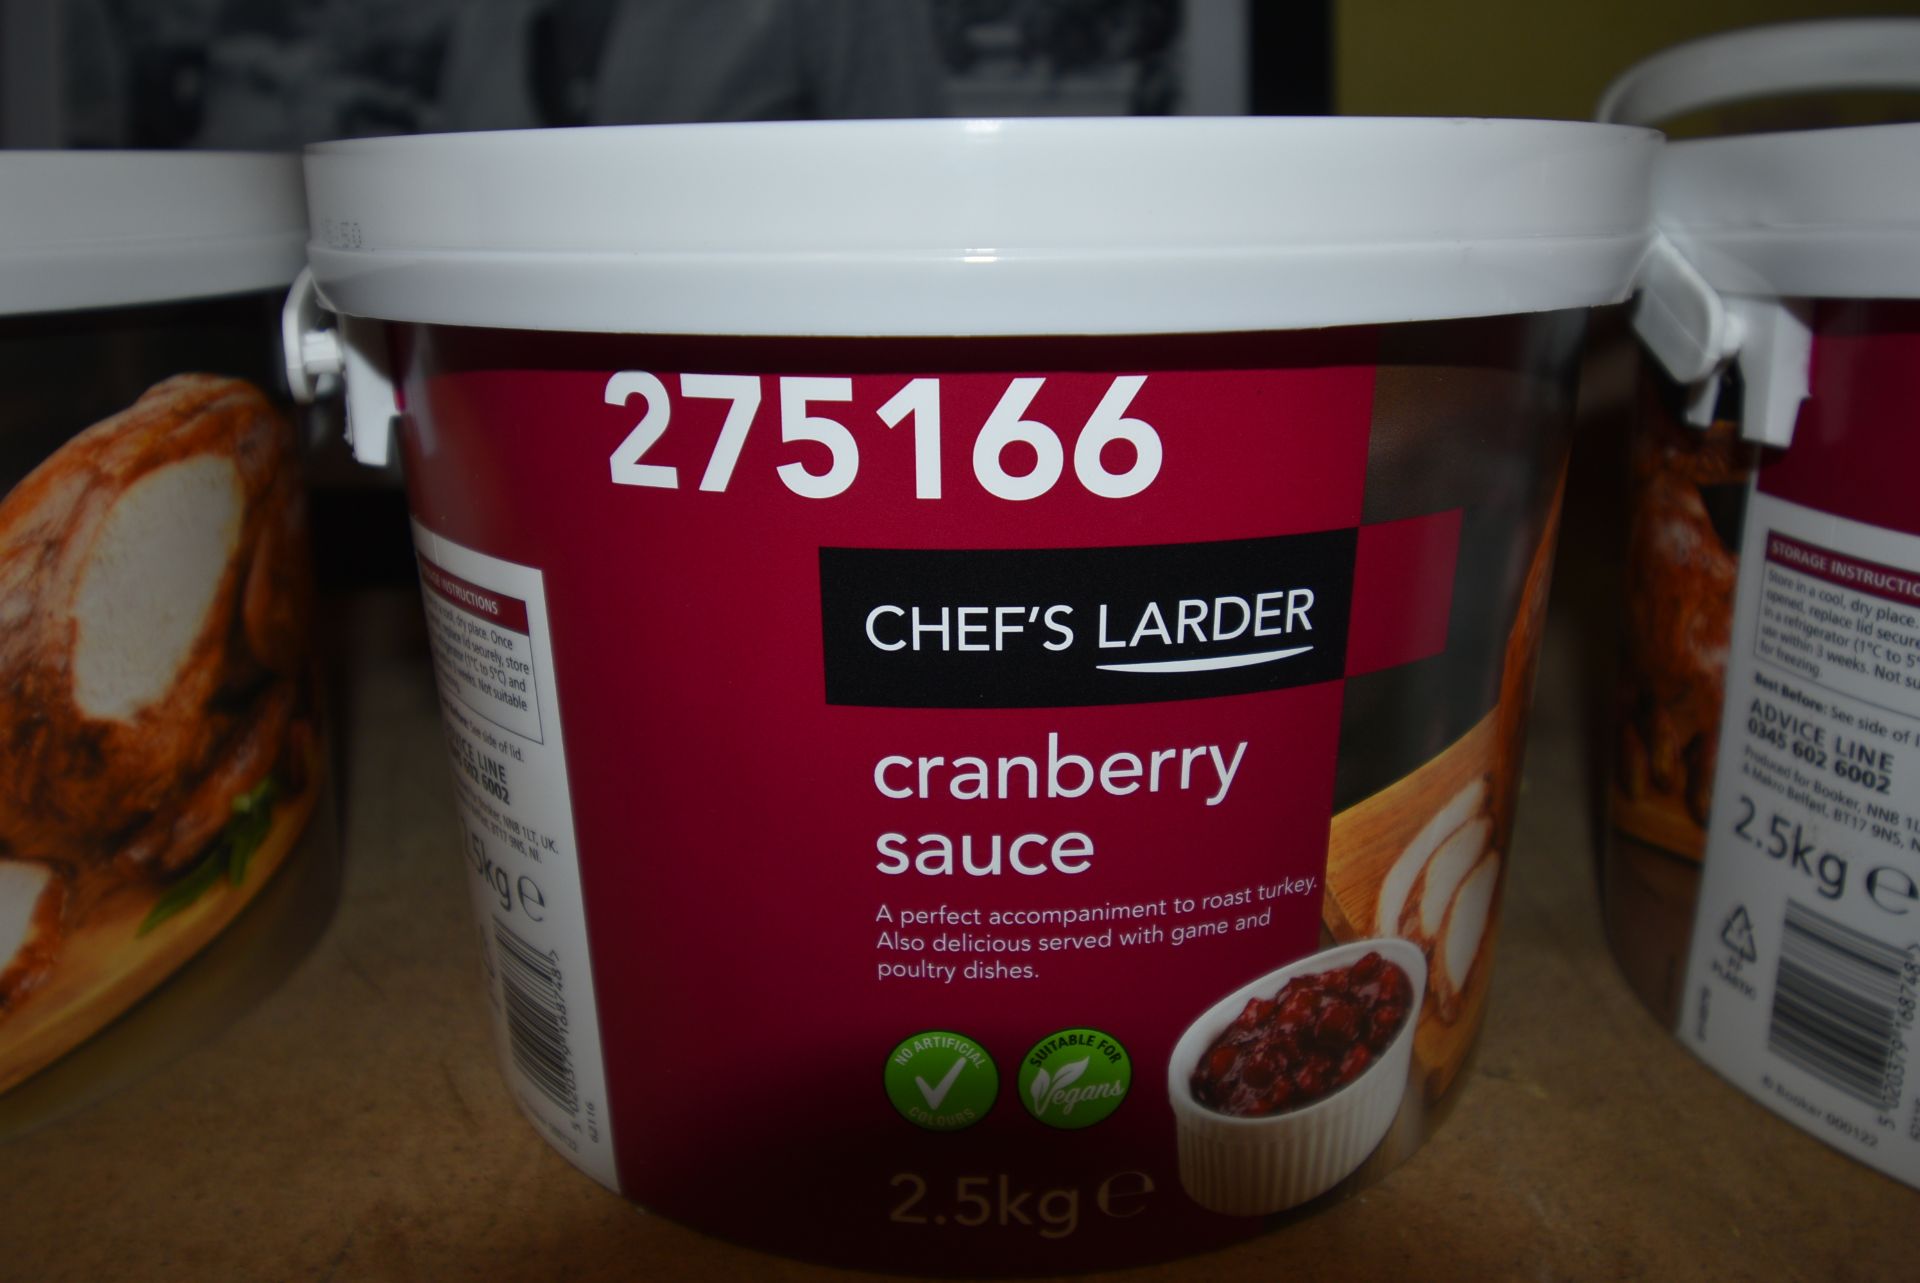 2.5kg of Cranberry Sauce